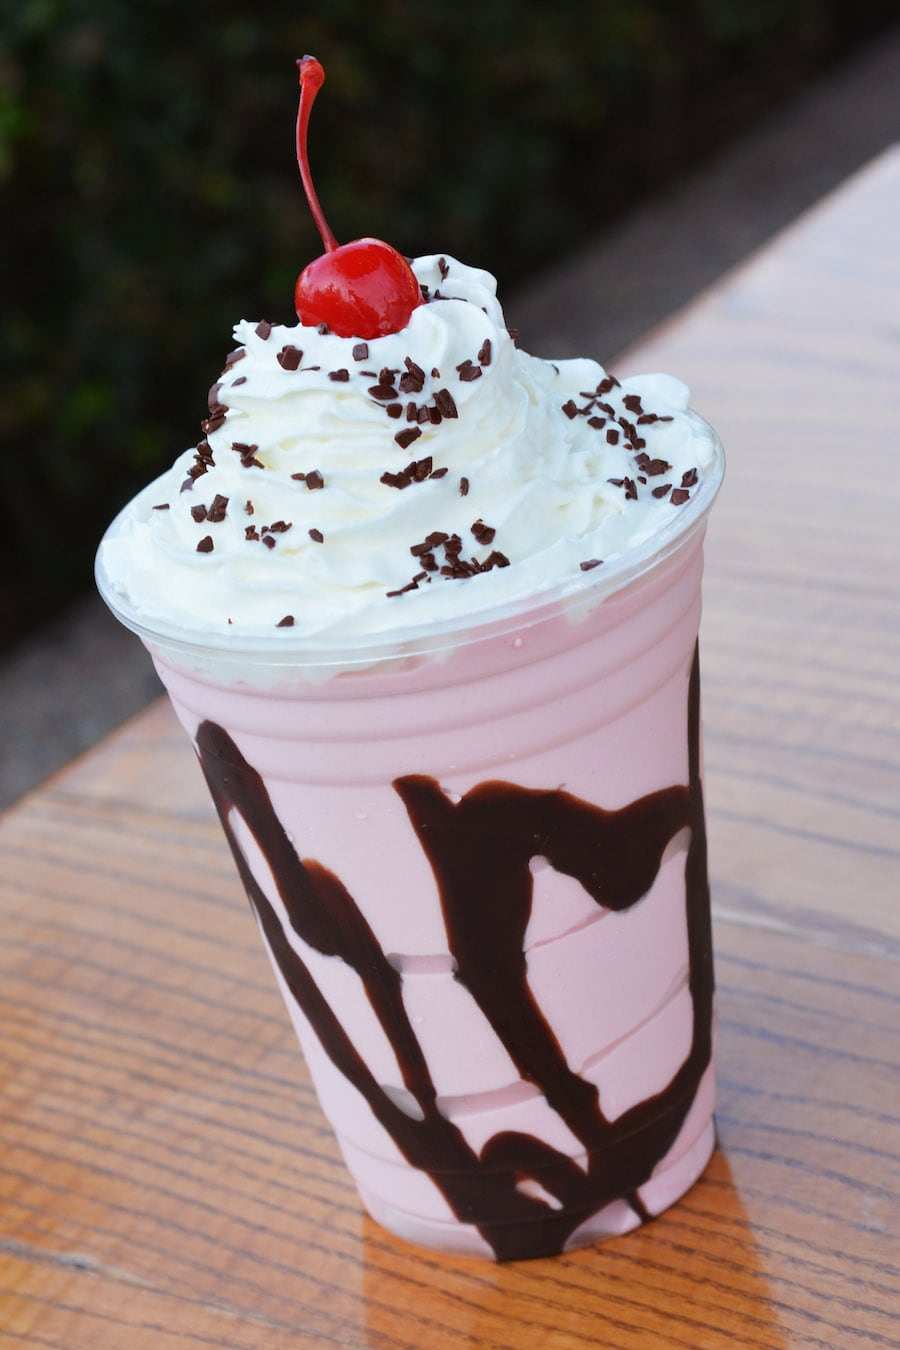 Black Forest Milkshake Now Available at Min & Bill’s Dockside Diner at Disney's Hollywood Studios